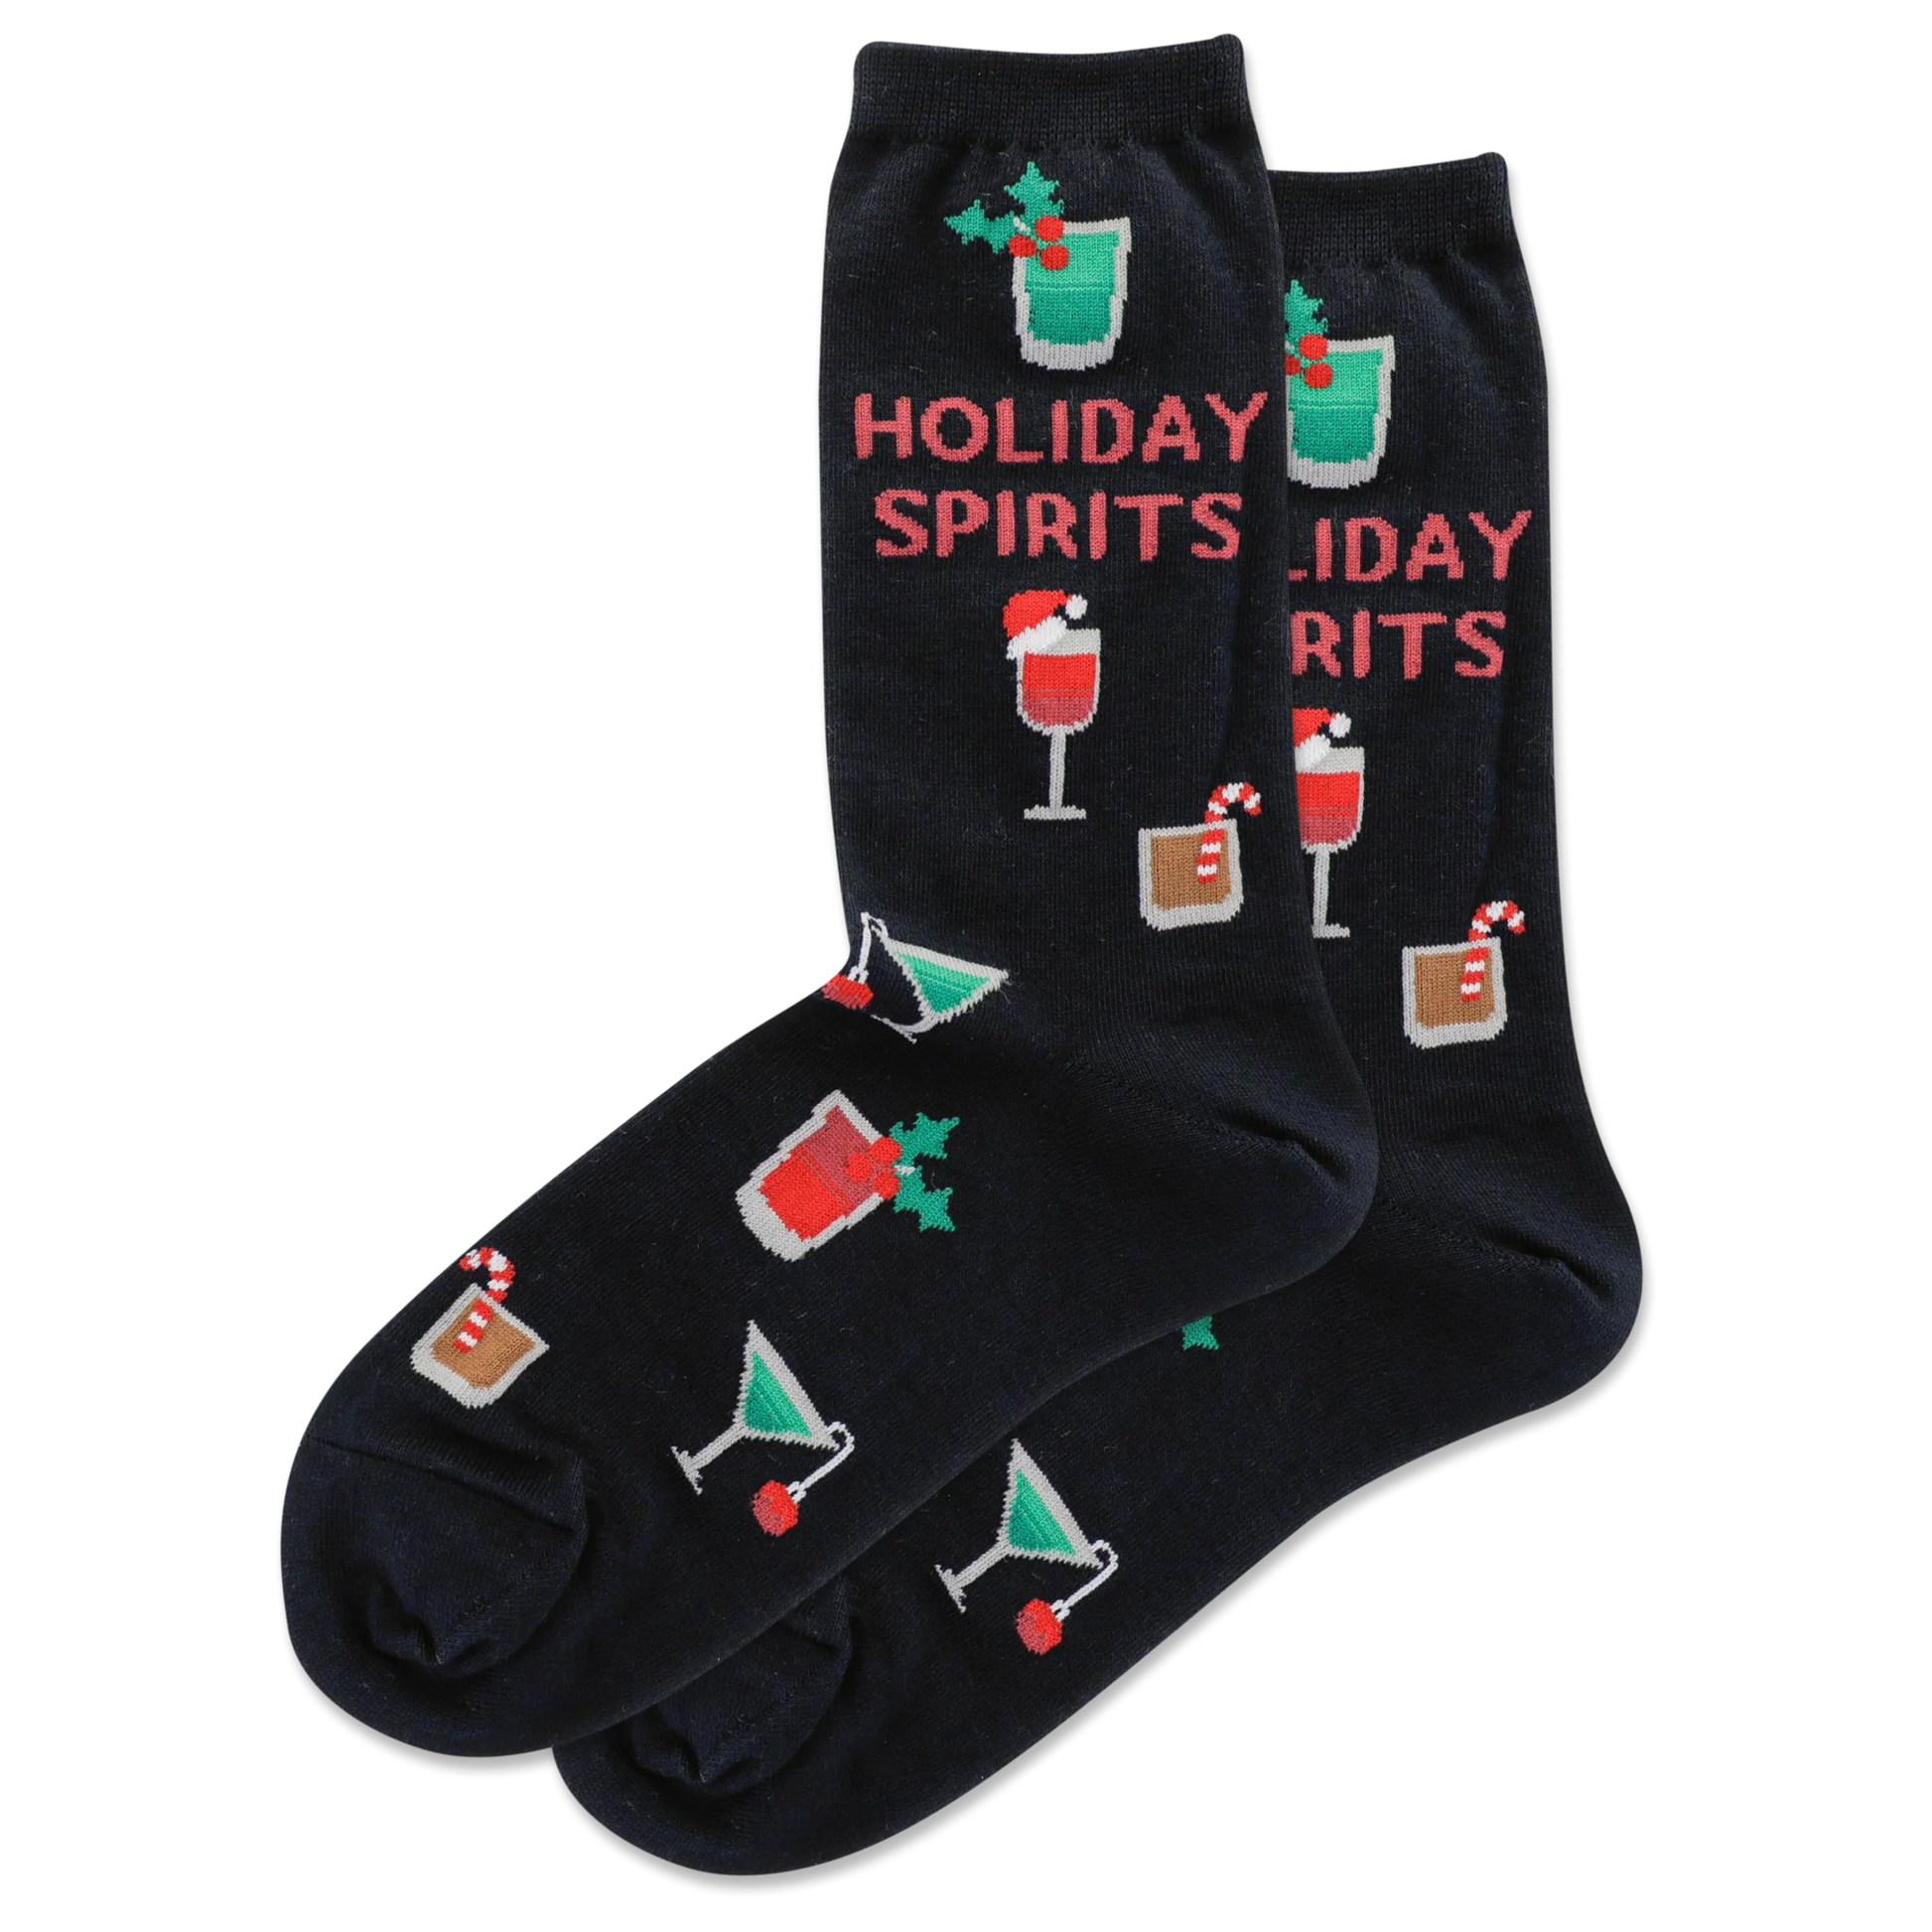 HOTSOX Men's Holiday Spirits Sock